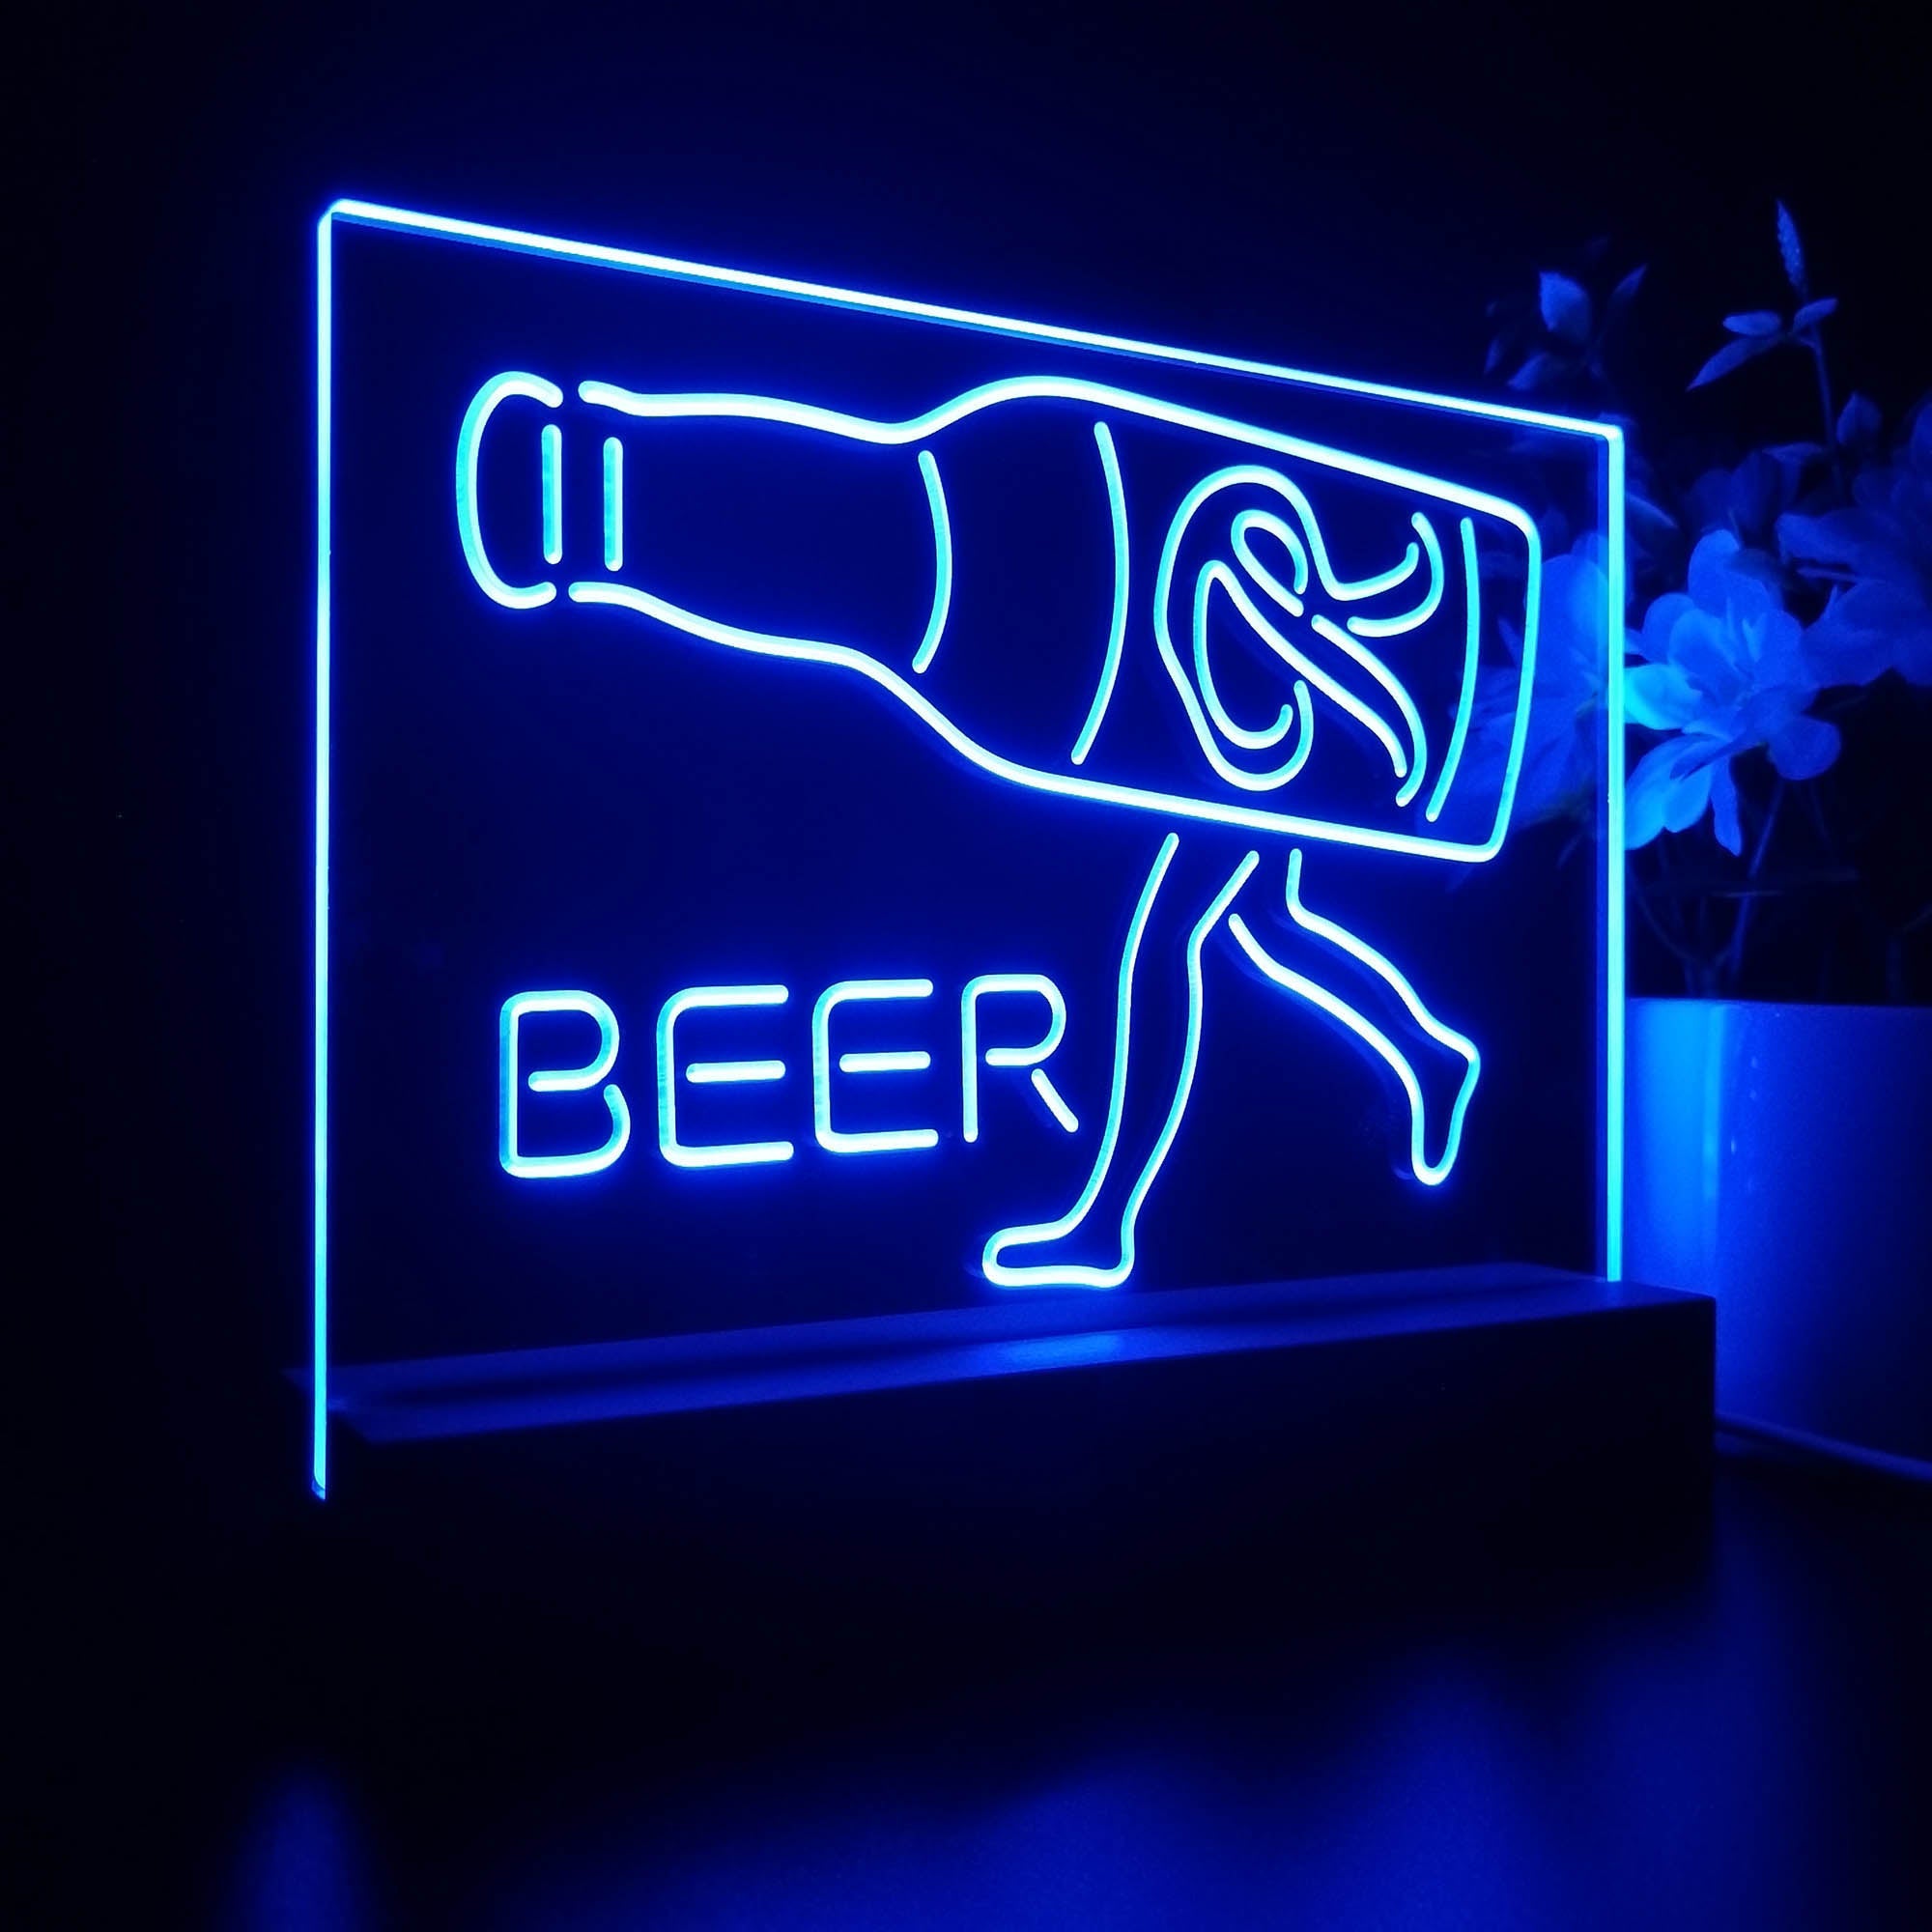 Rainier Beer Garage Man Cave Bar Night Light 3D Illusion Lamp Home Bar Decor